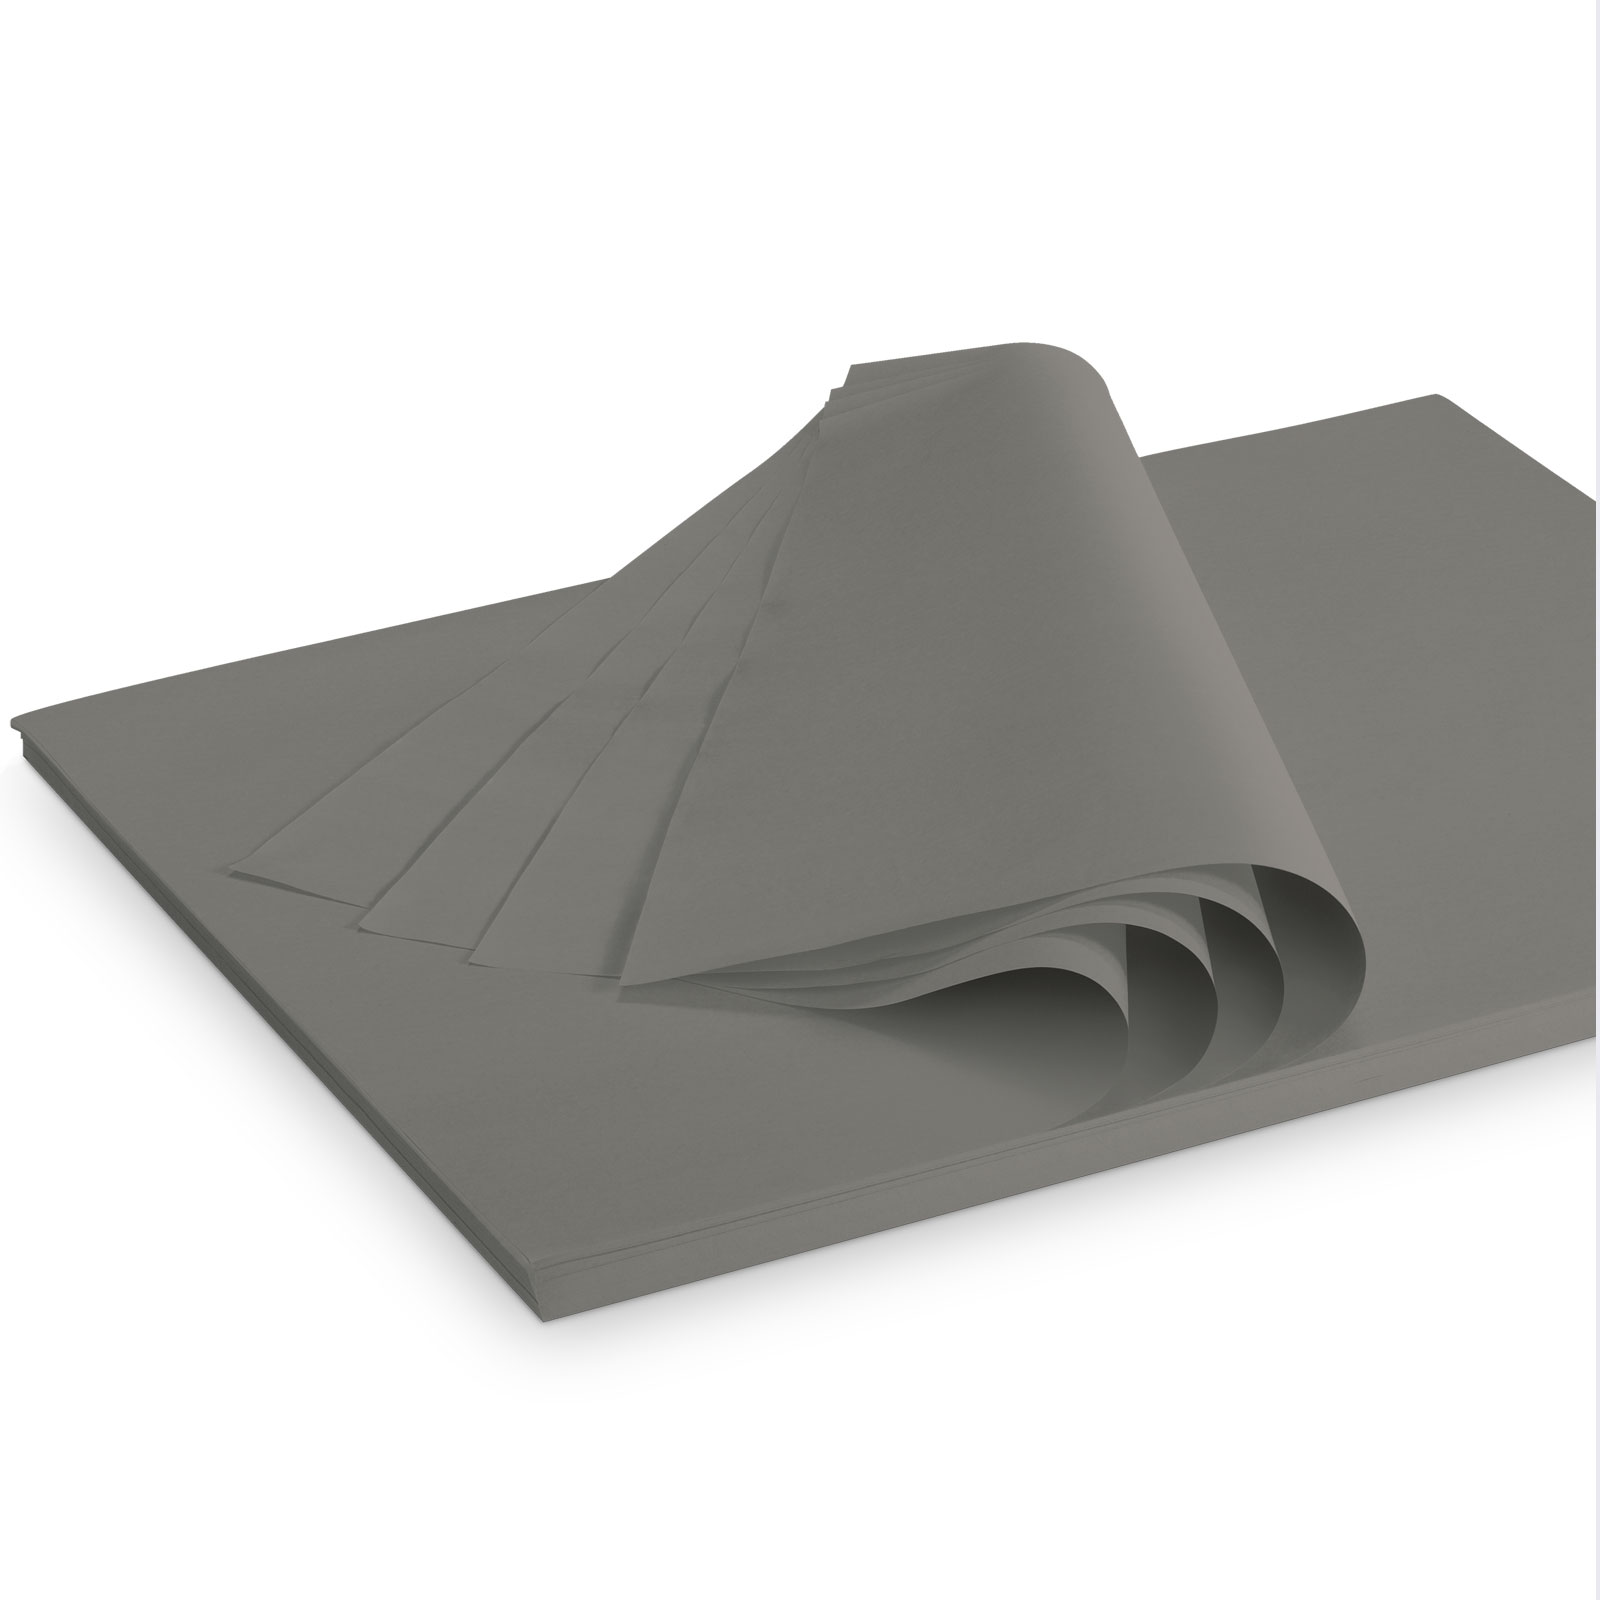 Seidenpapier 375x500mm grau 35g/m²,300 Bogen/ Karton = 2kg